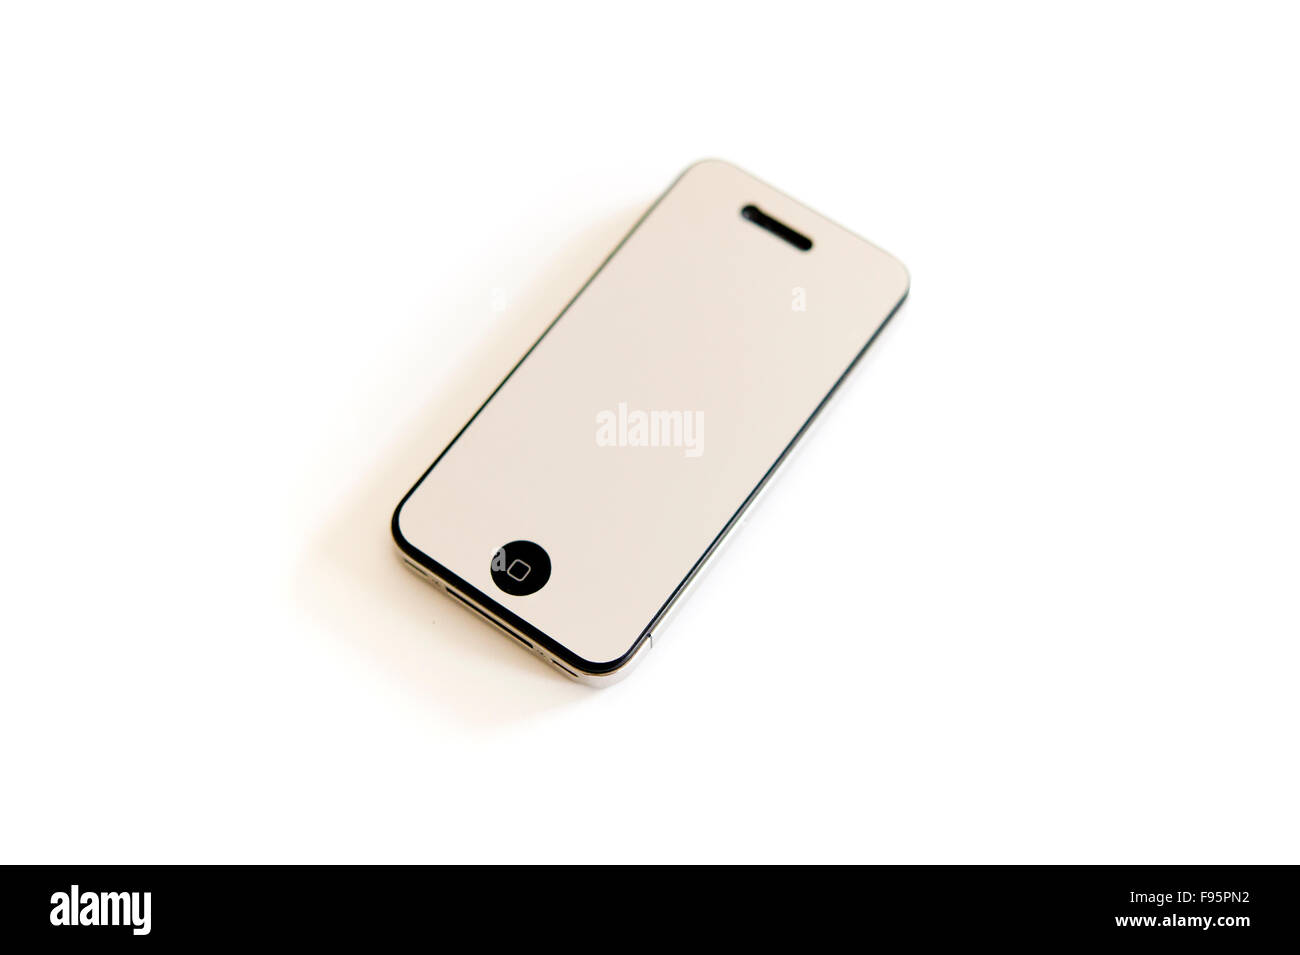 Mobile phone on white background Stock Photo